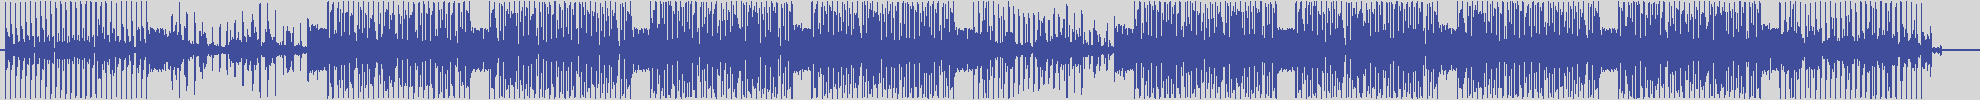 nf_boyz_records [NFY080] Tony Key - Be a Better You [T. Beta's Mix] audio wave form